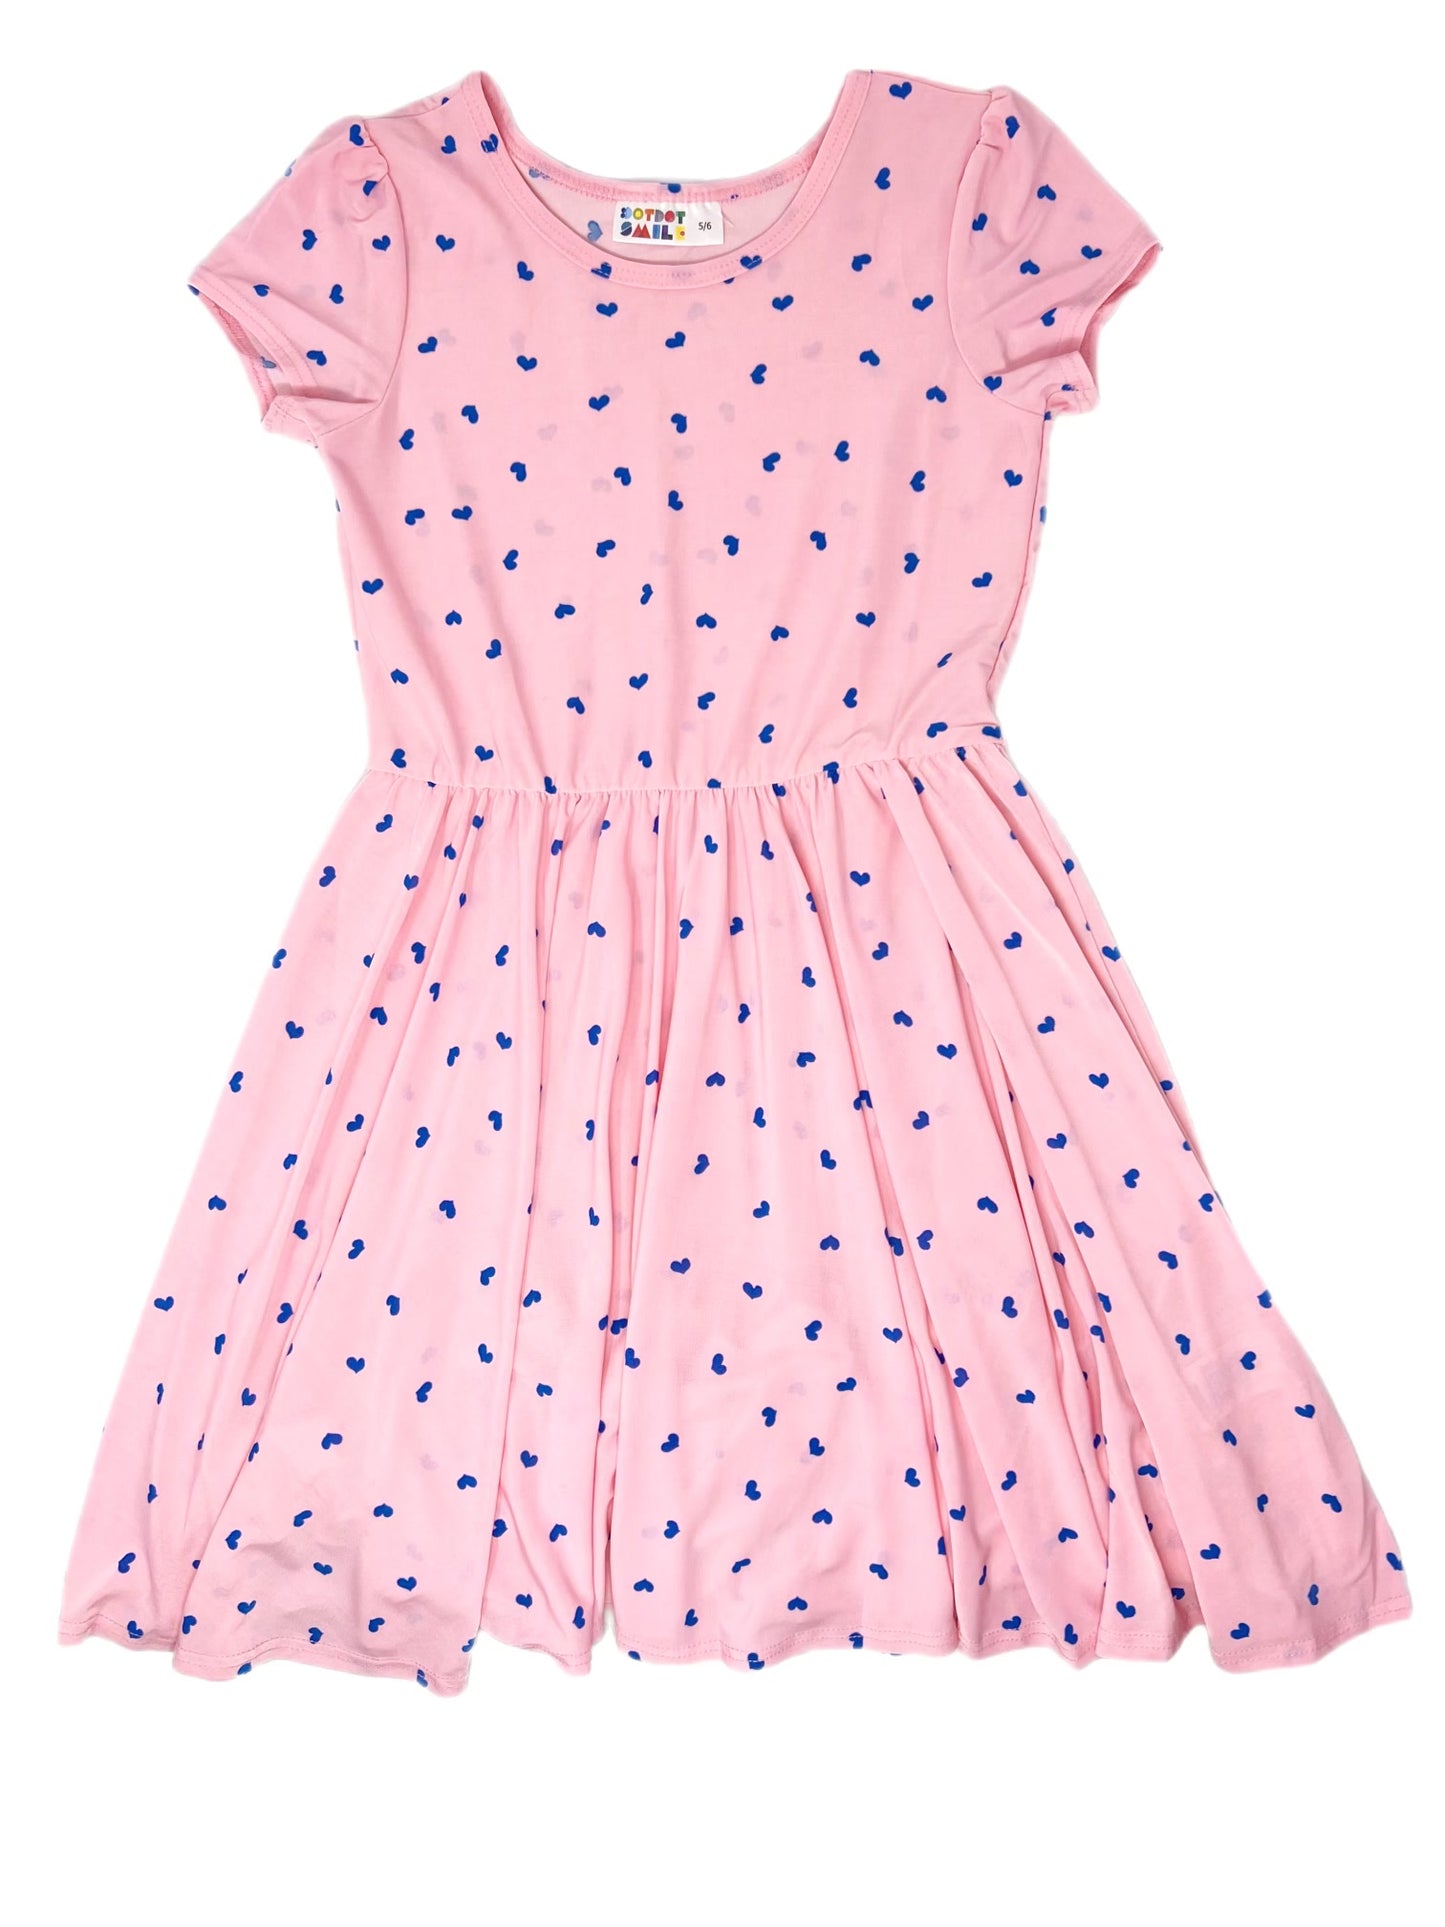 Blue Hearts on Pink Cap Dress